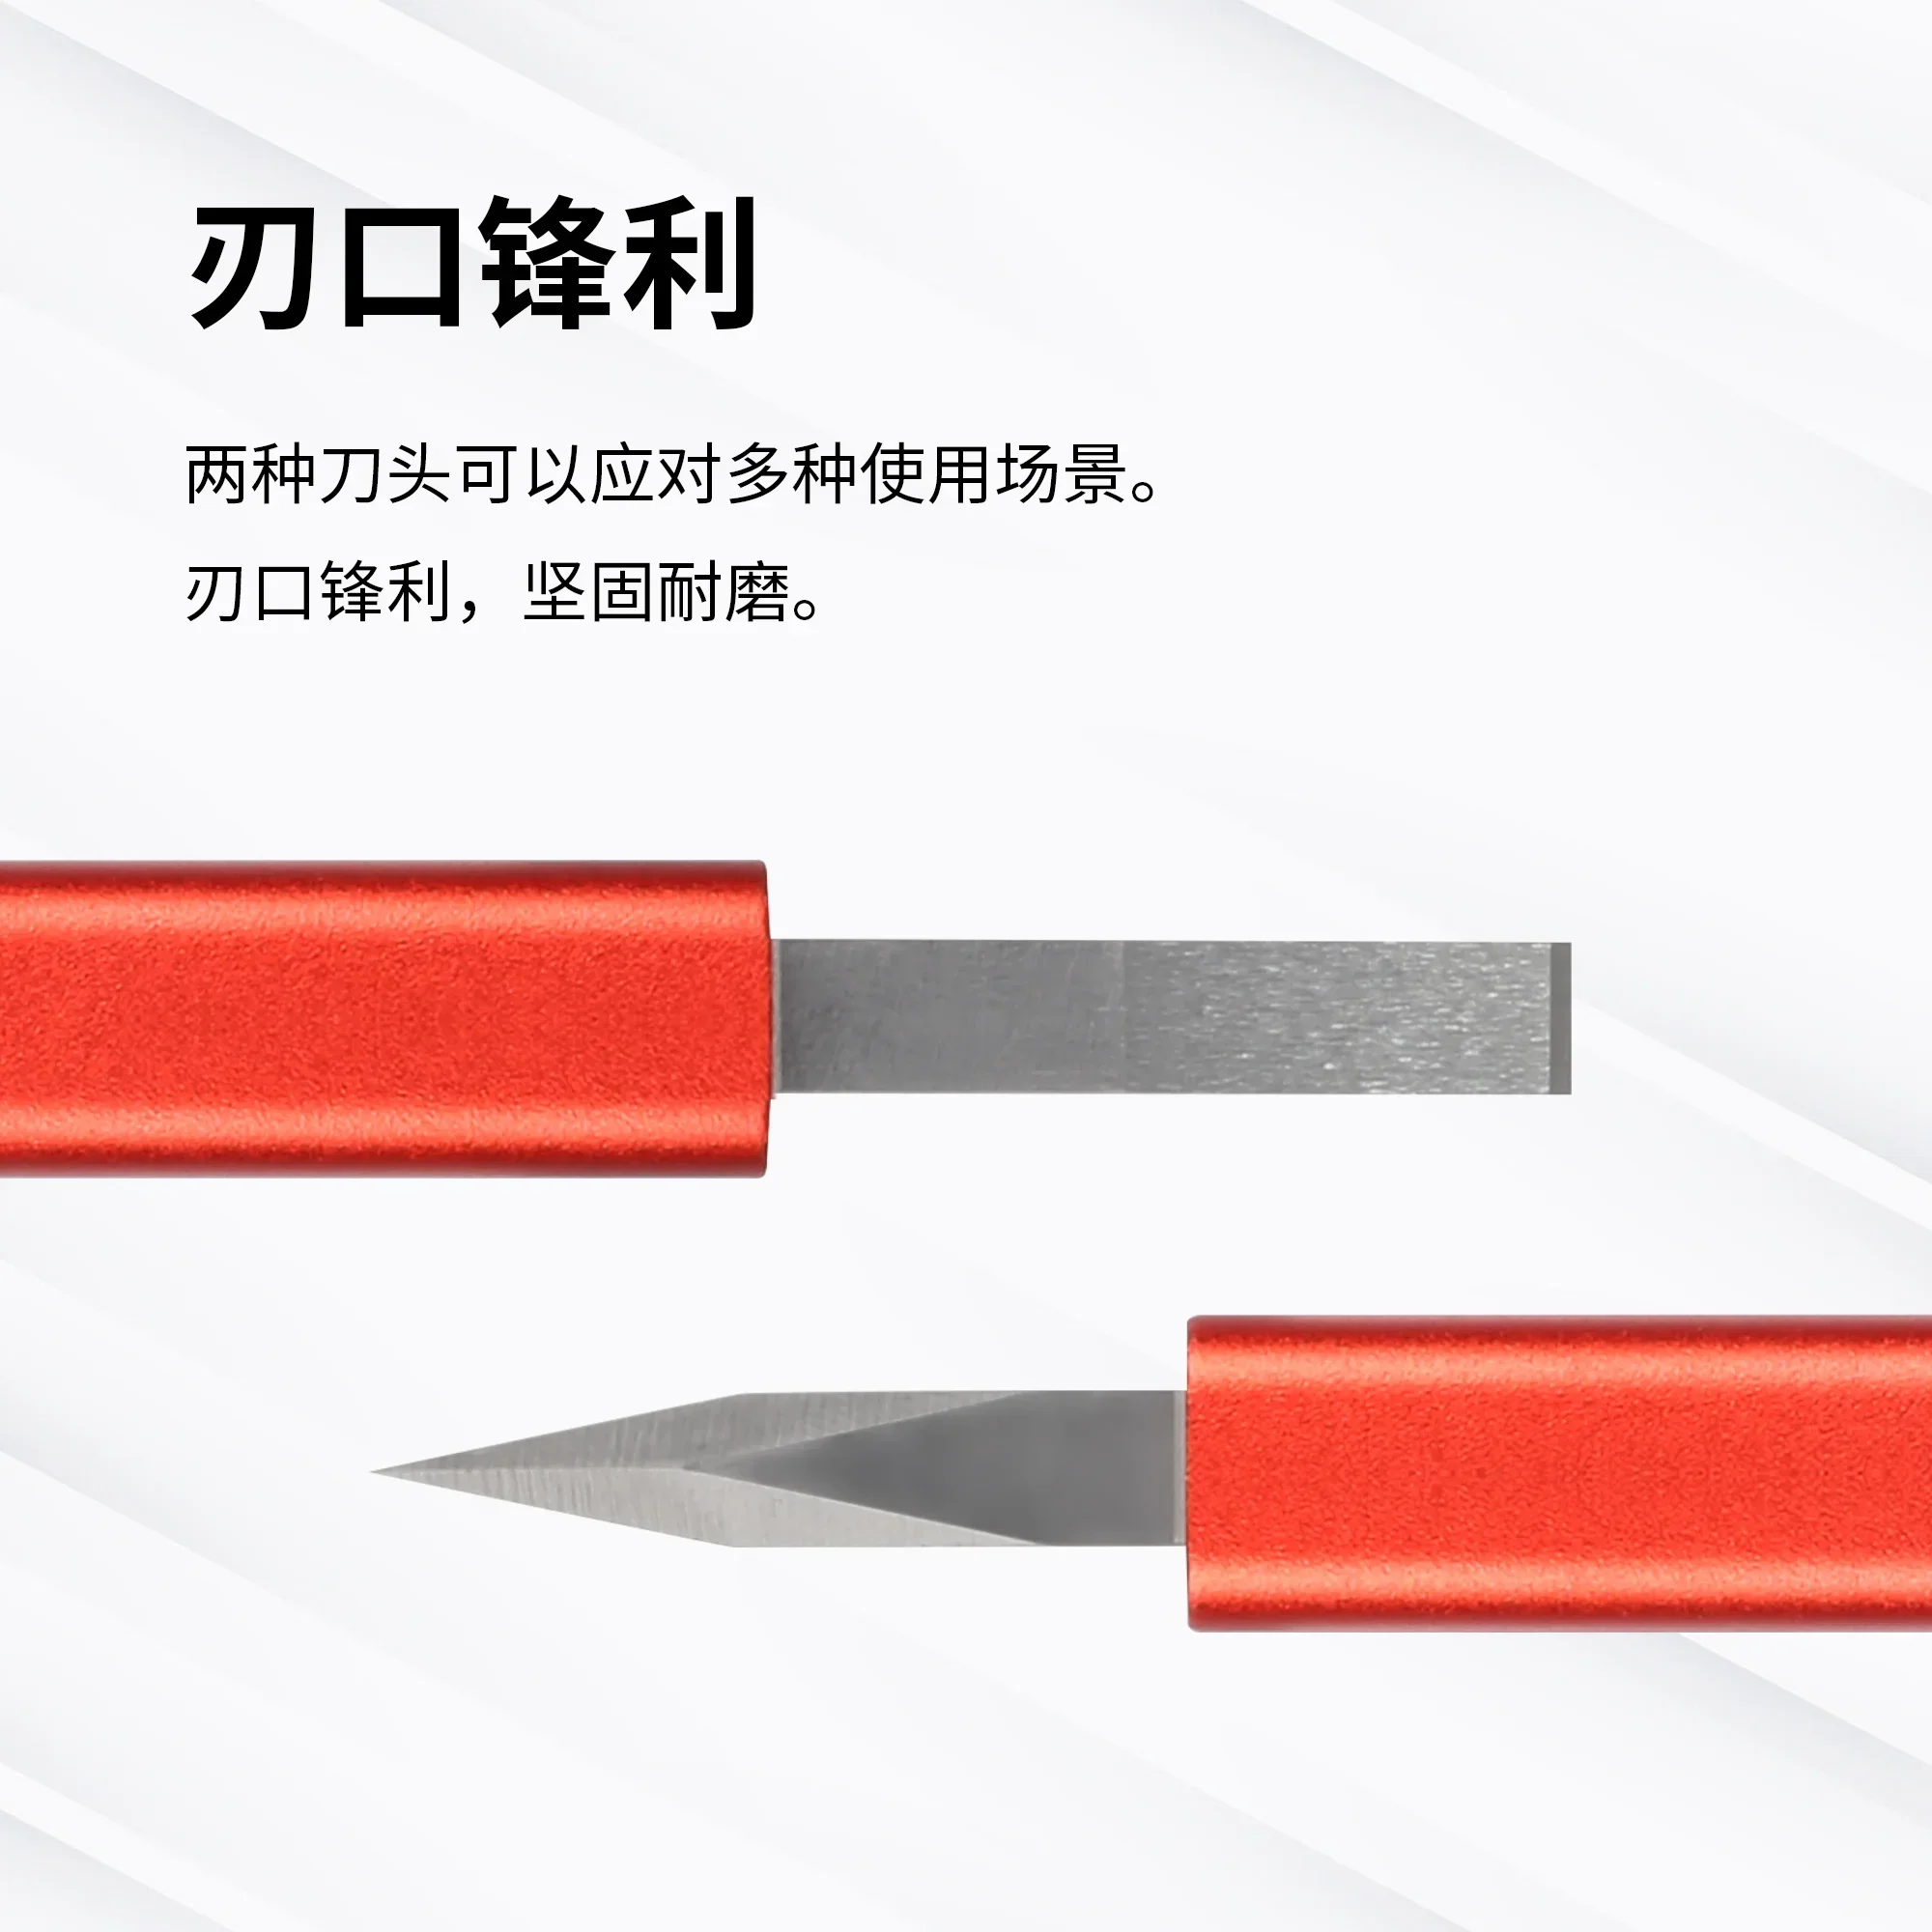 Dspiae AT-TSA AT-TSB 440 nerez ocel široký huba strčit nůž s aluminium slitina ovládat odolný versatile